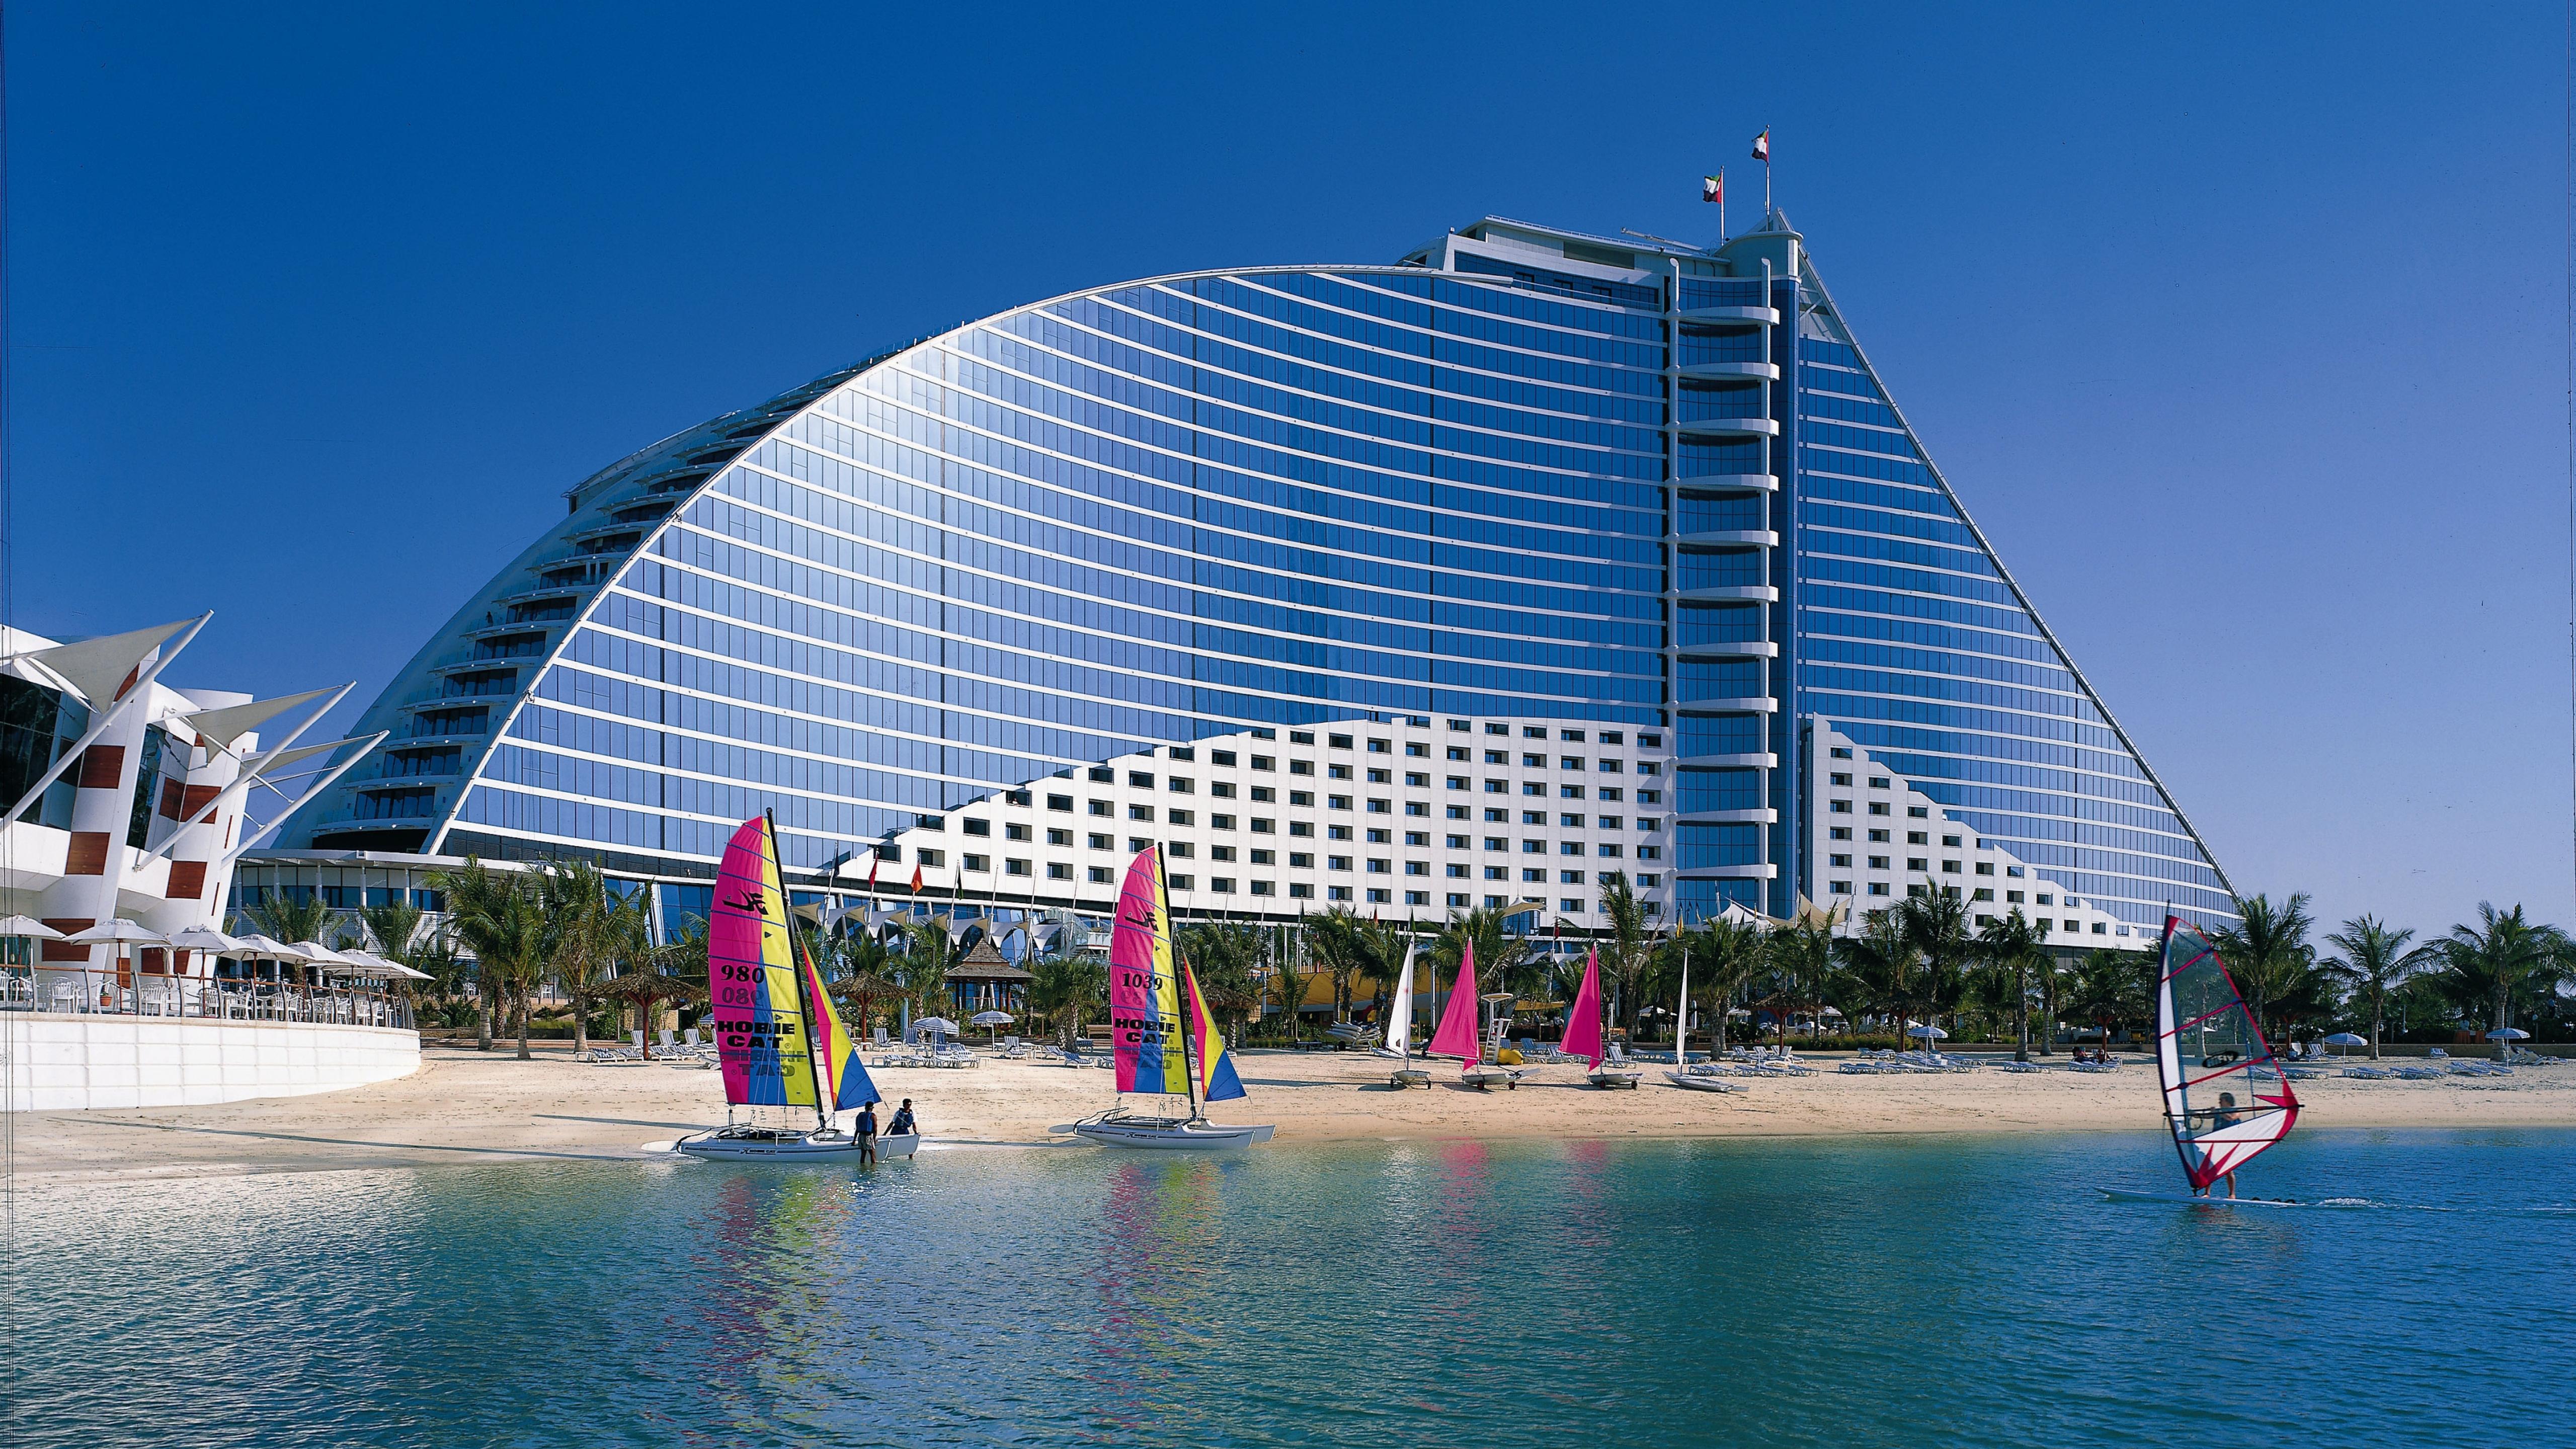 Download Wallpaper 5120x2880 Jumeirah hotel on the beach from Dubai